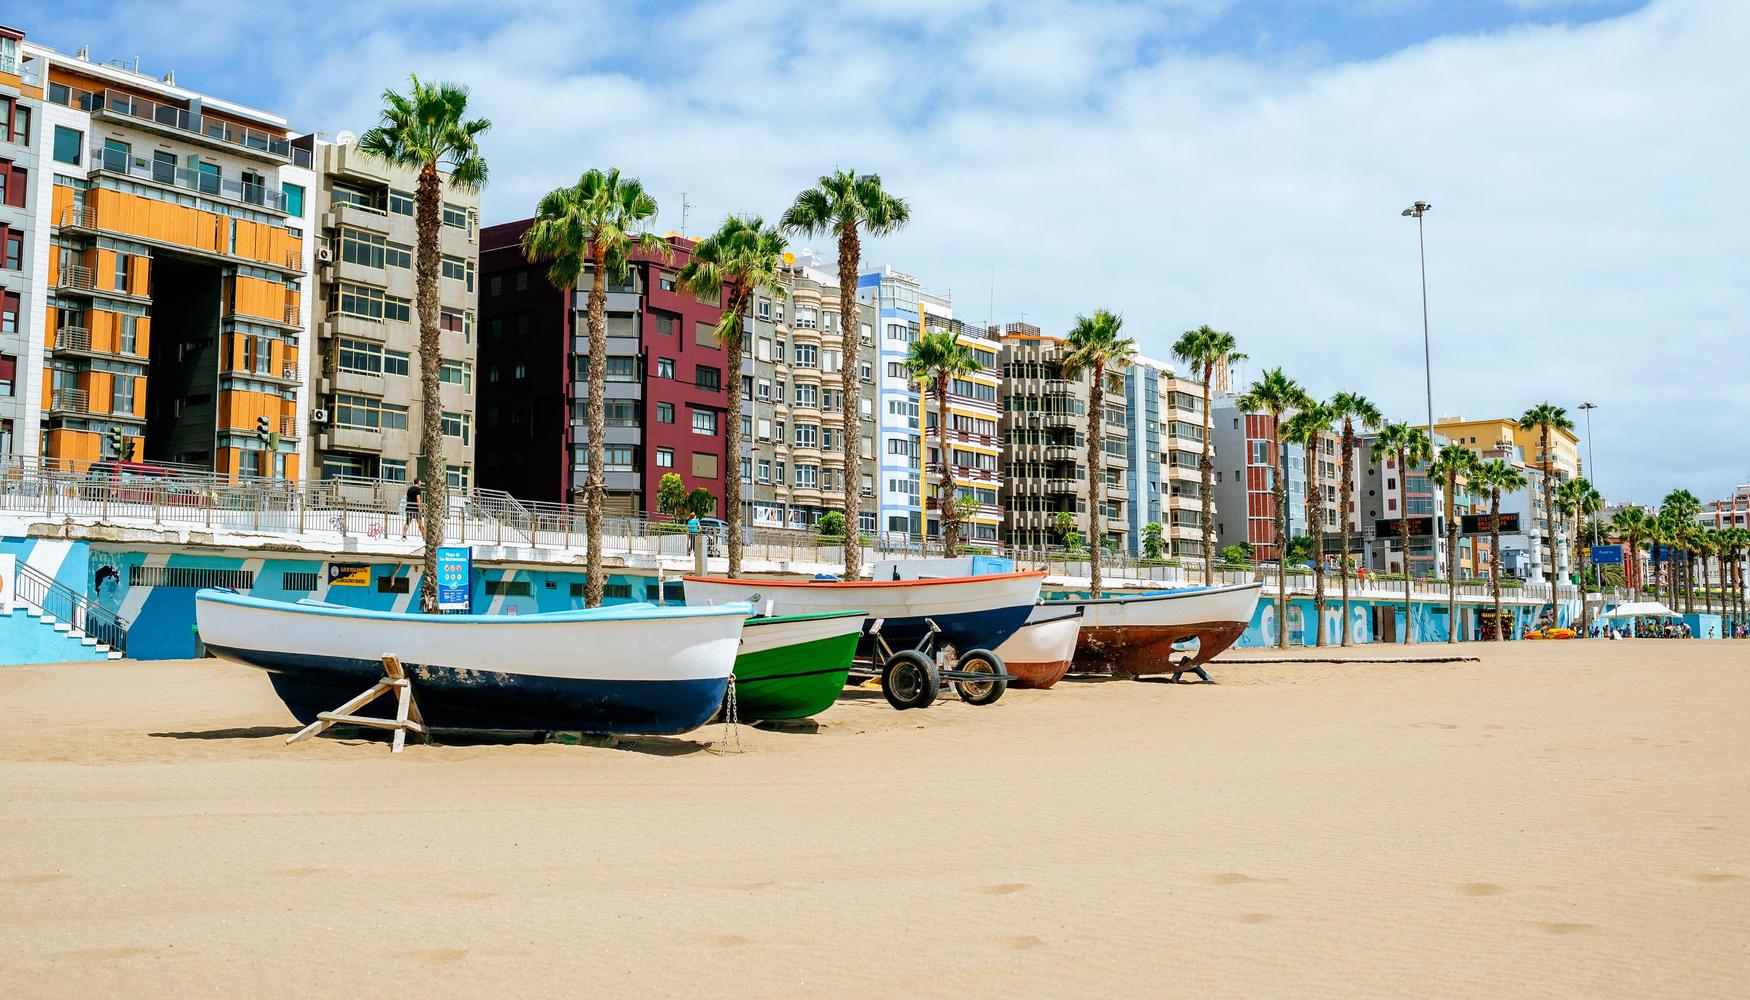 Holidays Las Palmas de Canaria from £431 - Search KAYAK